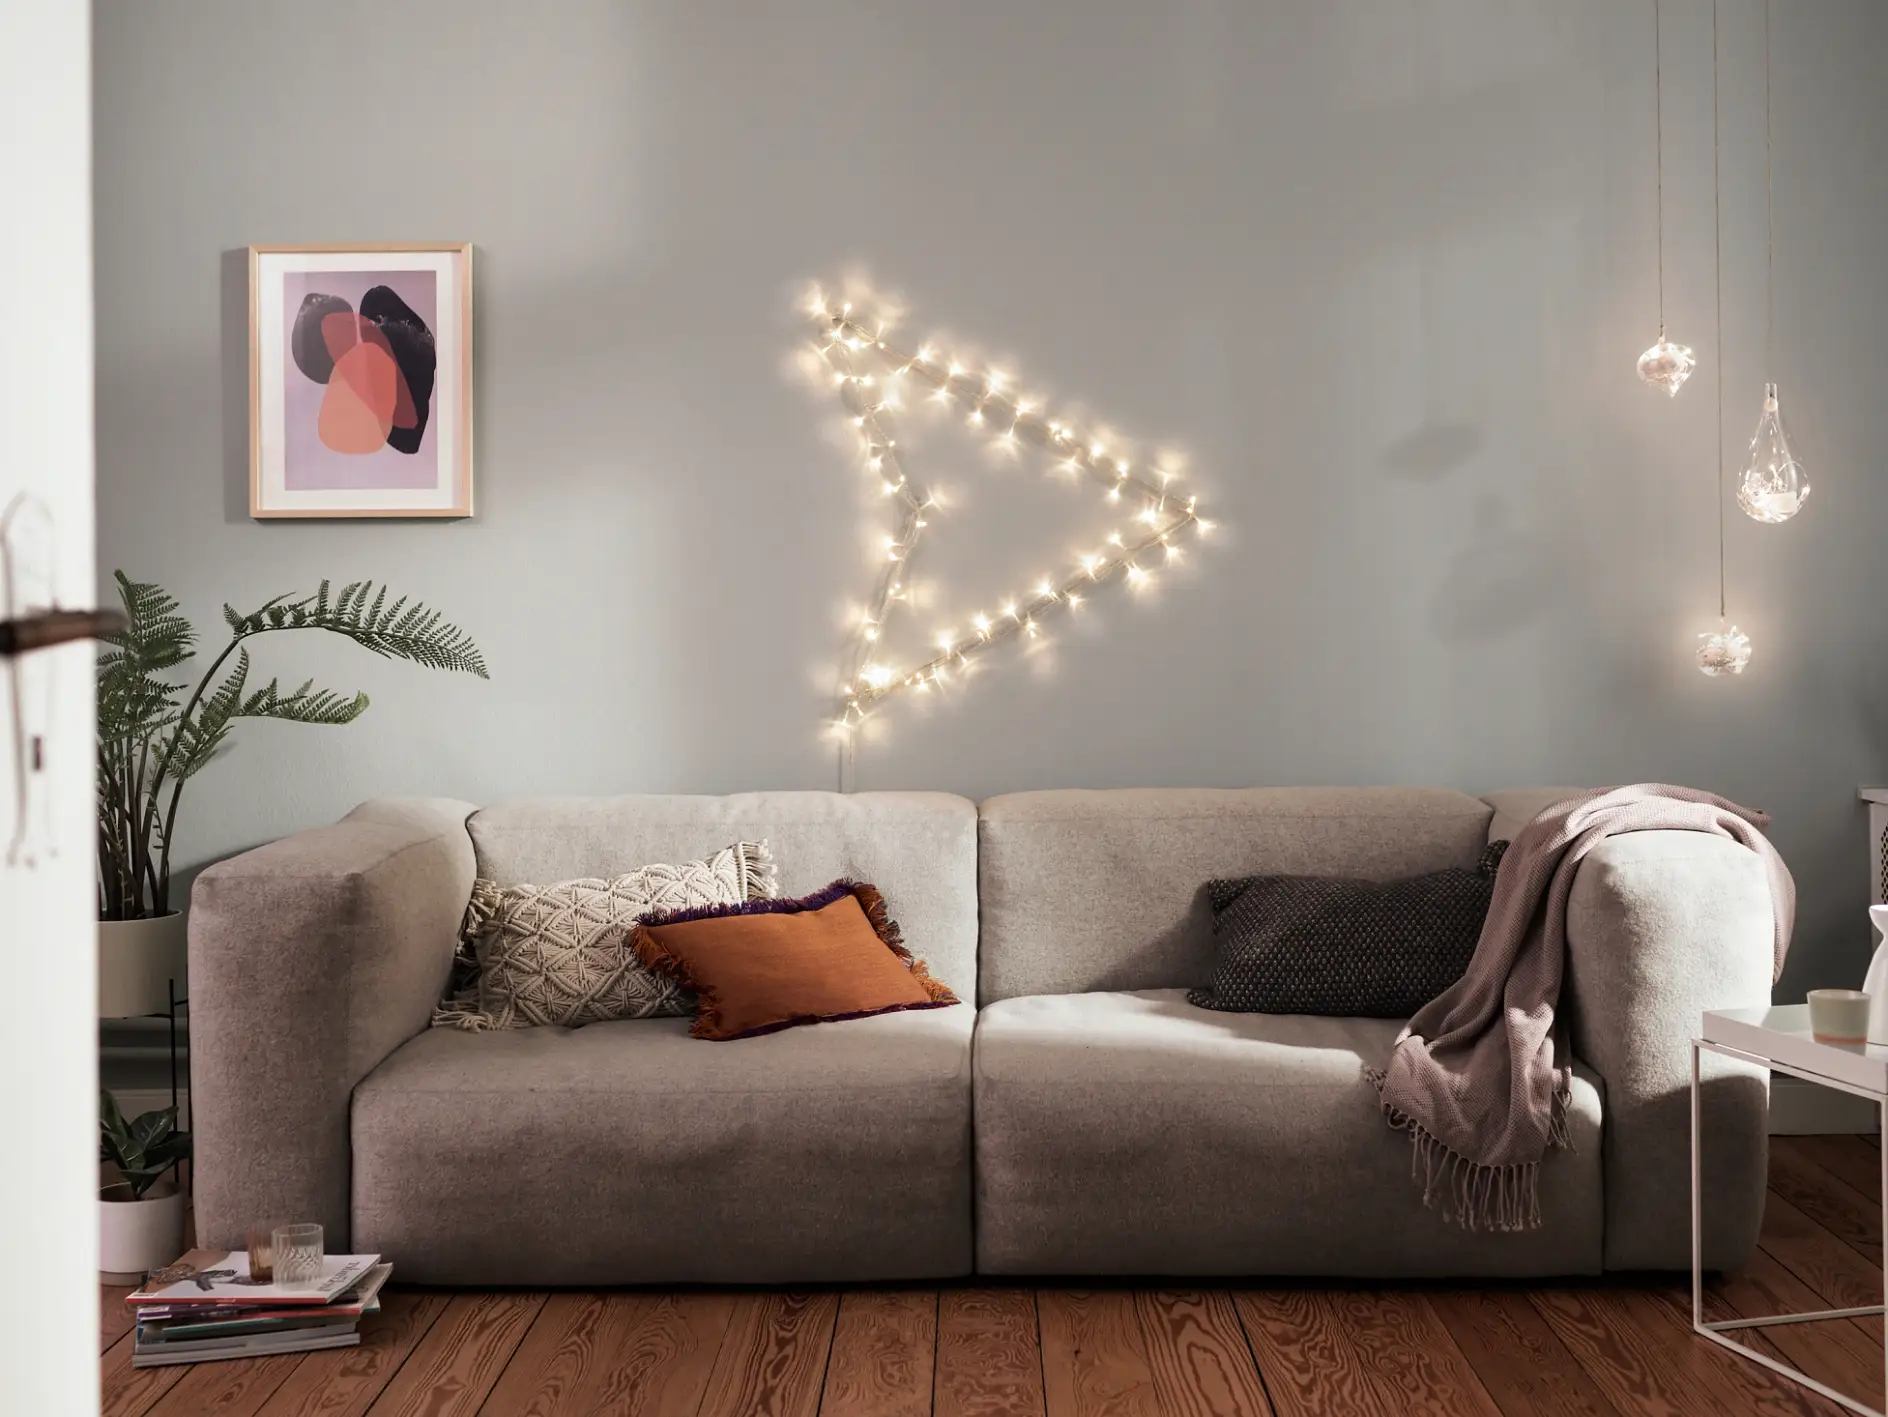 Beleuchtungsideen – Teaser: Graues Sofa in der Mitte, darüber ein beleuchteter Pfeil an der Wand.